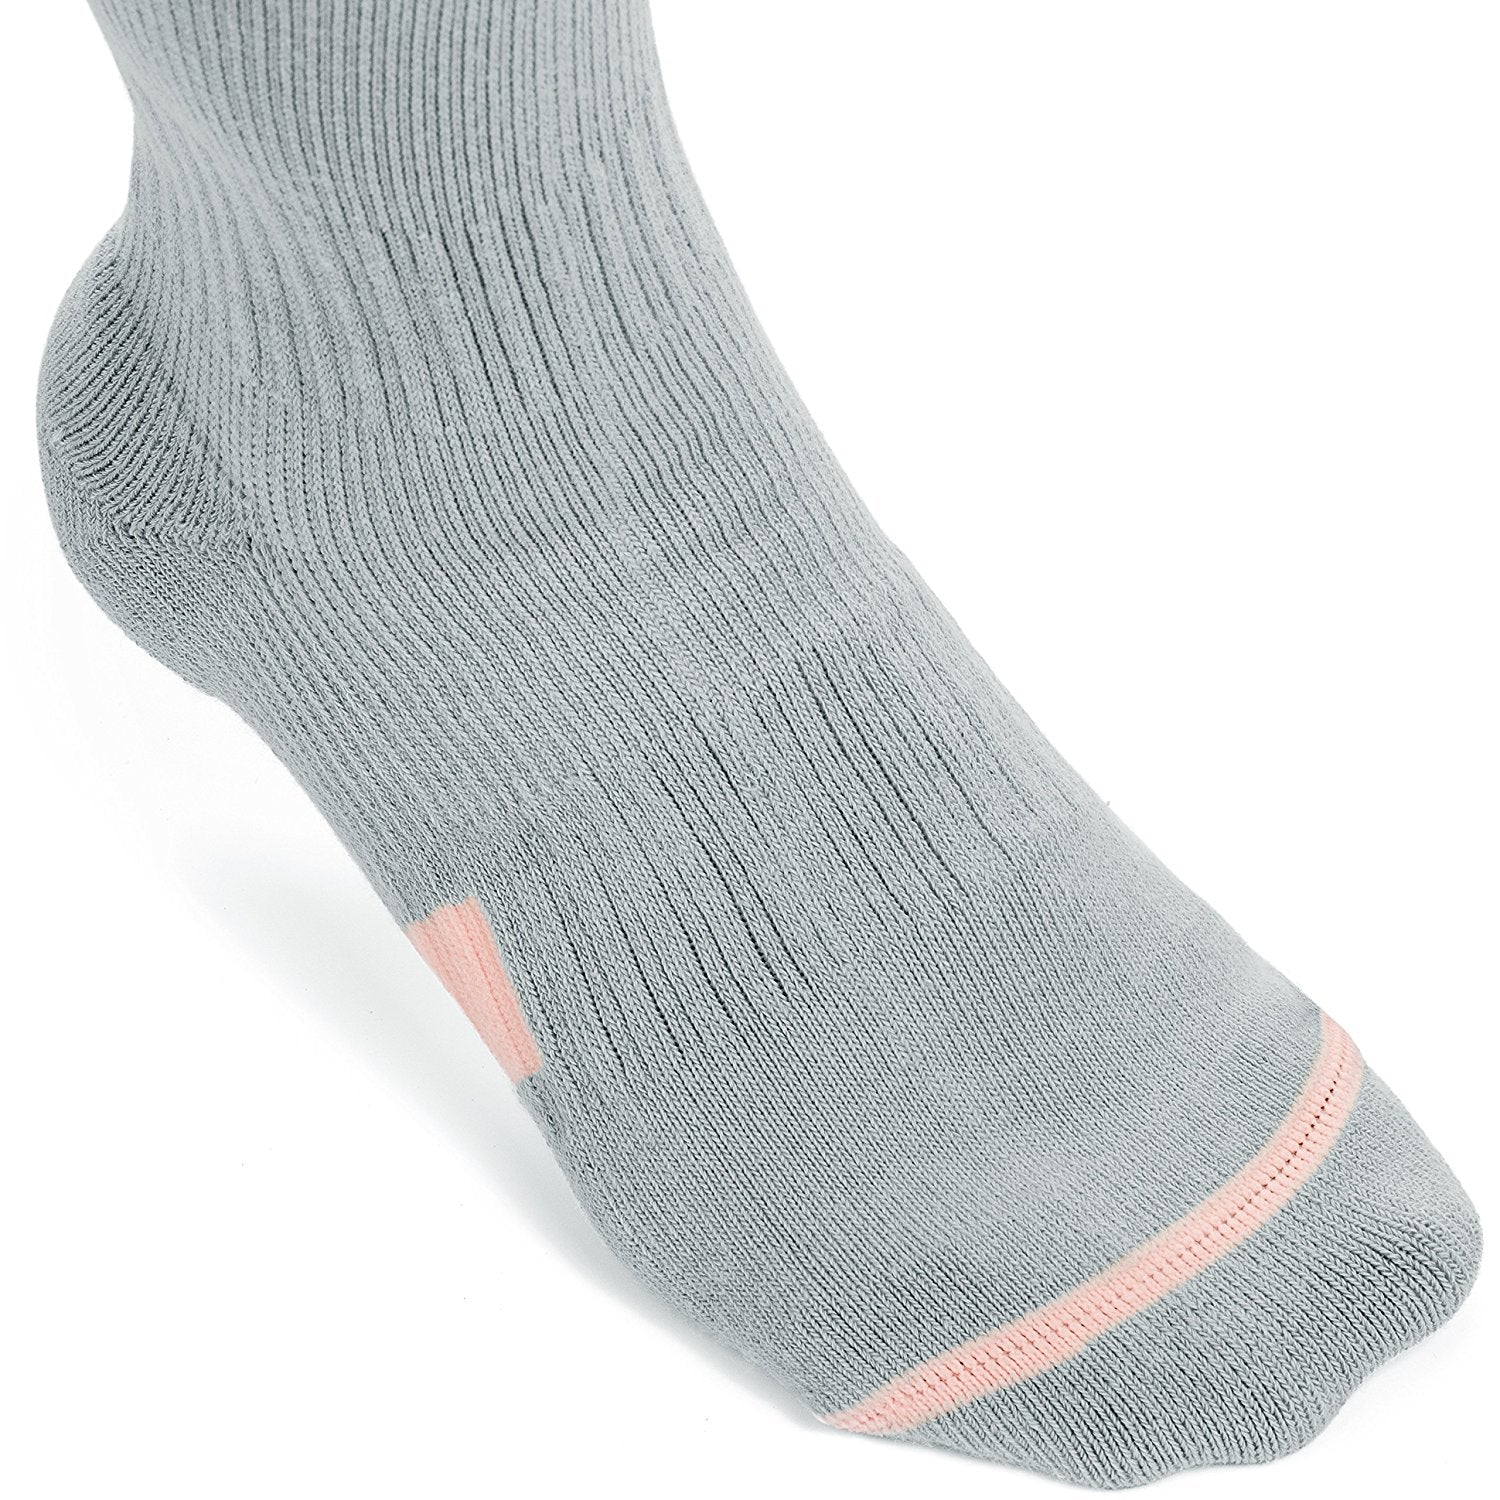 MadeMother Compression Socks